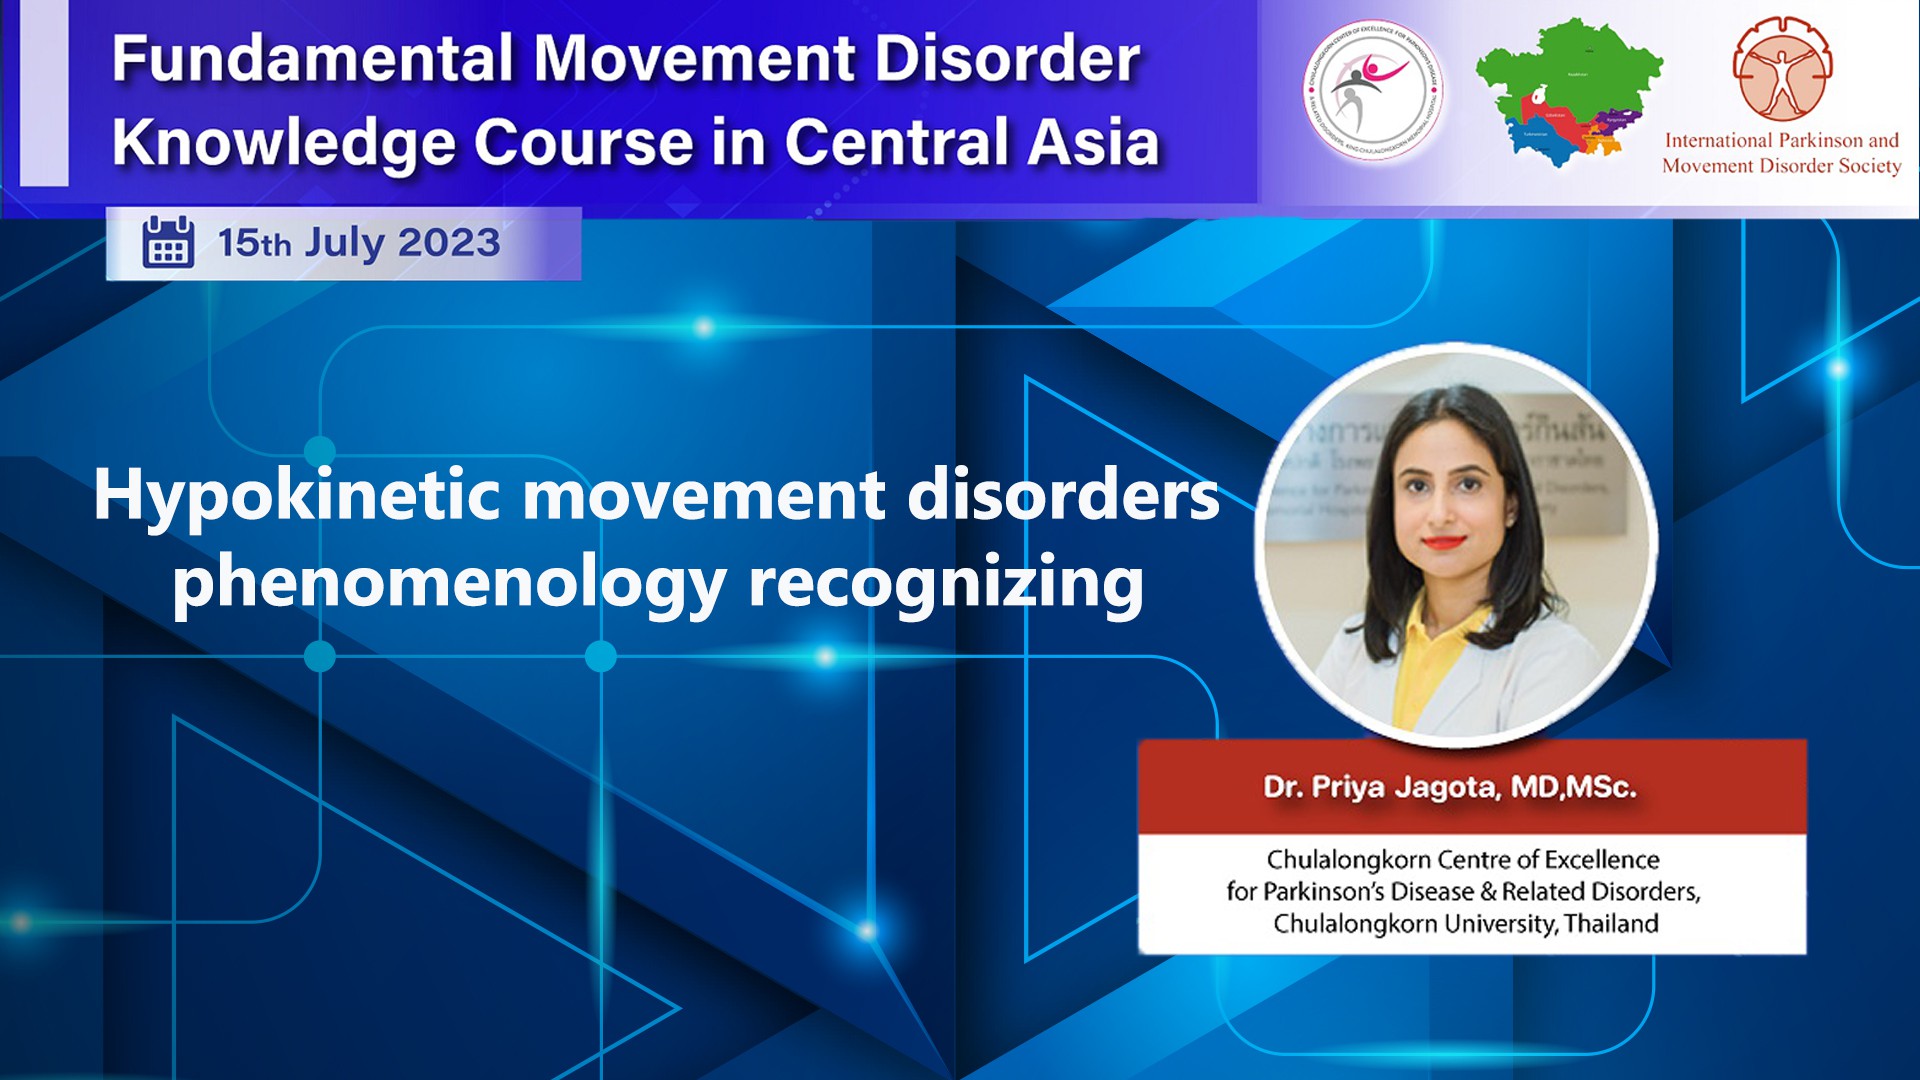 Hypokinetic movement disorders phenomenology recognizing